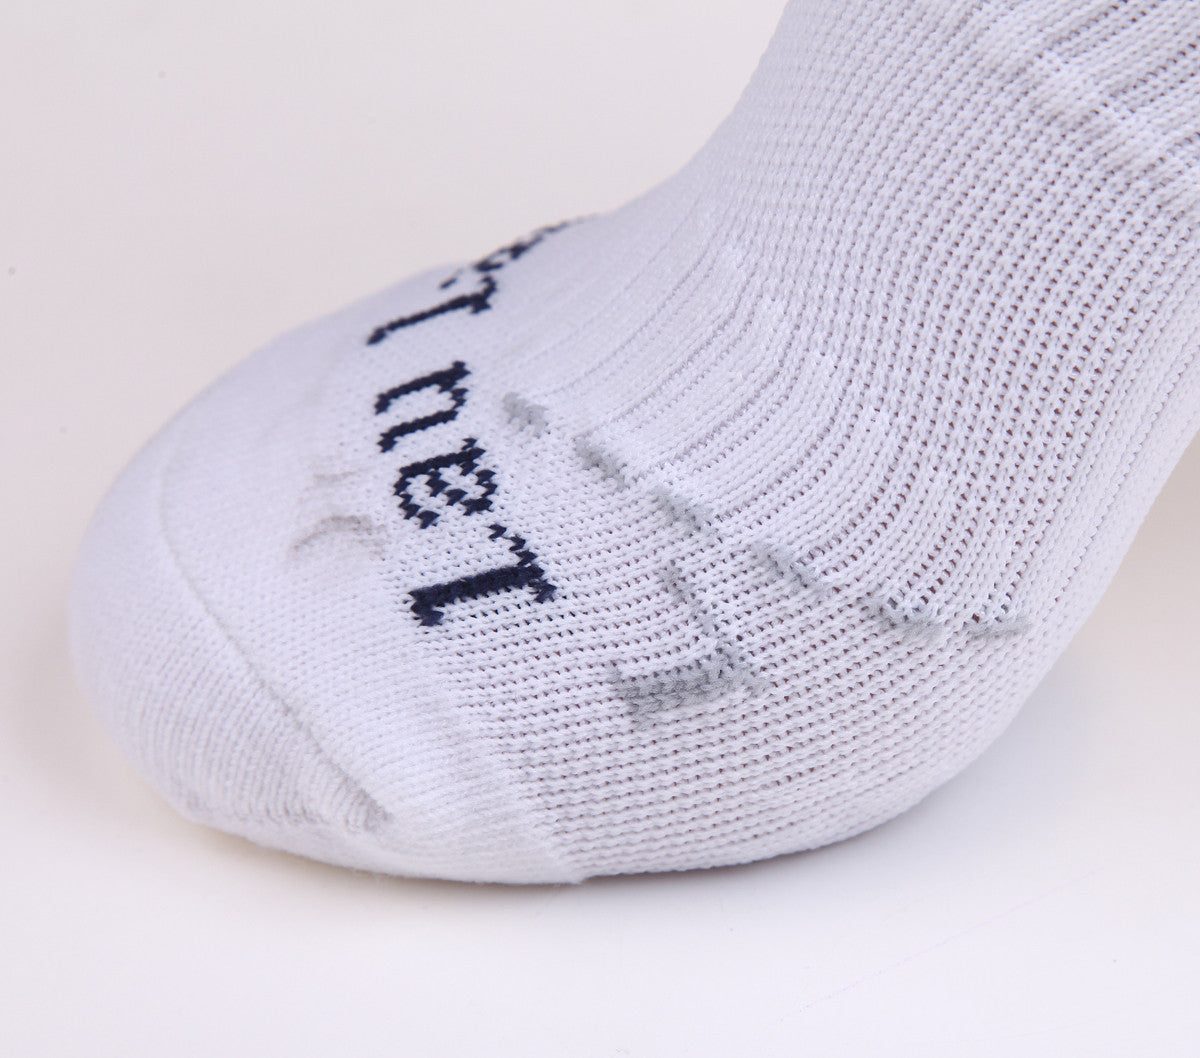 compression running socks